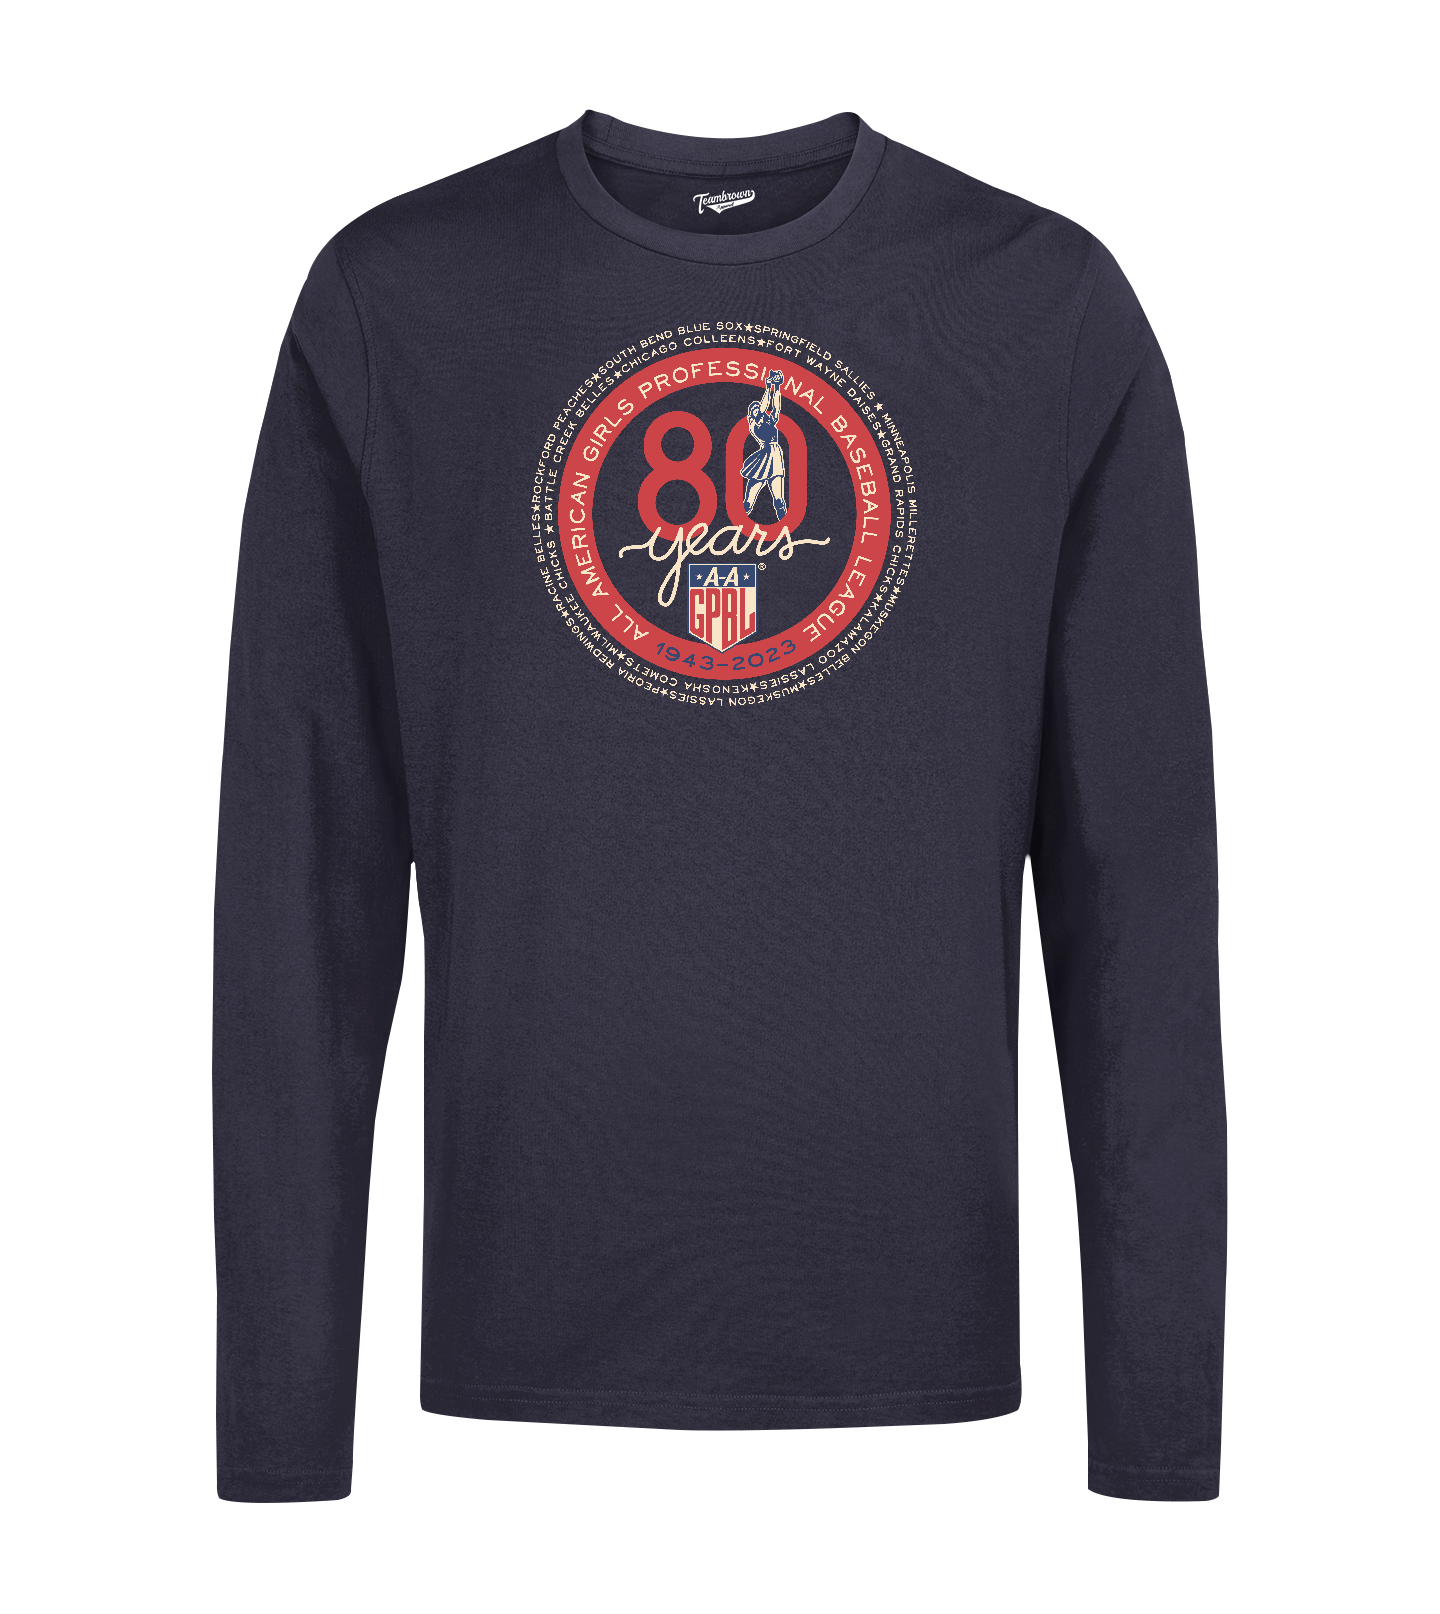 AAGPBL 80th Anniversary - 1943 - 2023 - Unisex Long Sleeve Crew T-Shirt